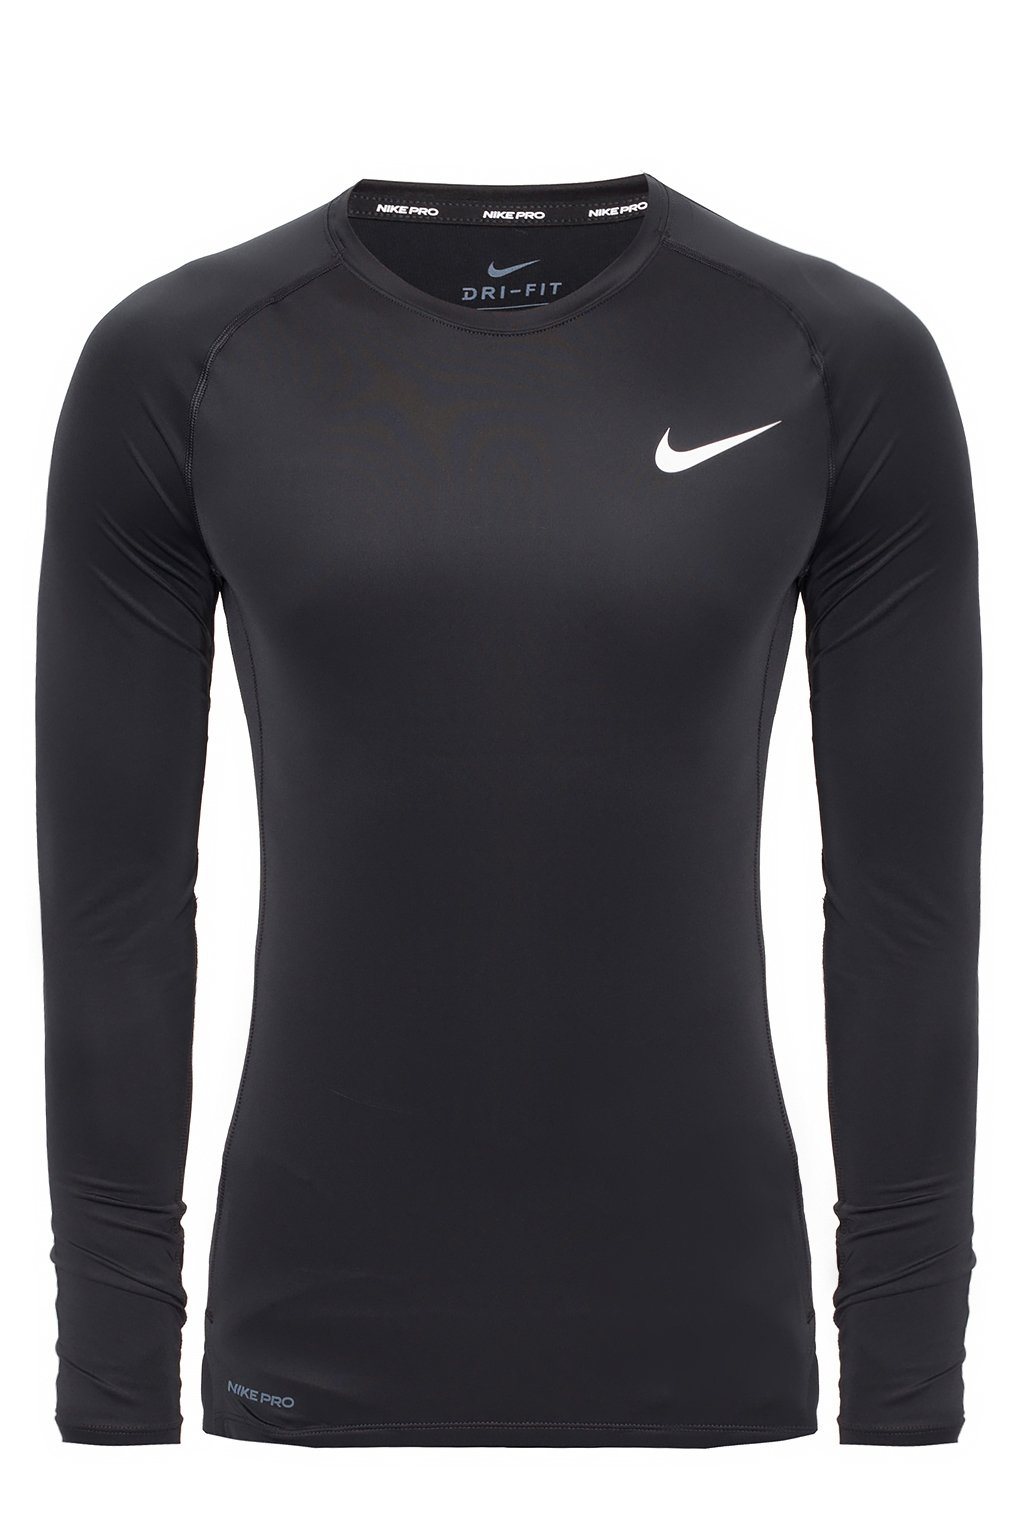 Farvel skole Insister Nike Performance T-shirt with logo | Men's Clothing | Vitkac